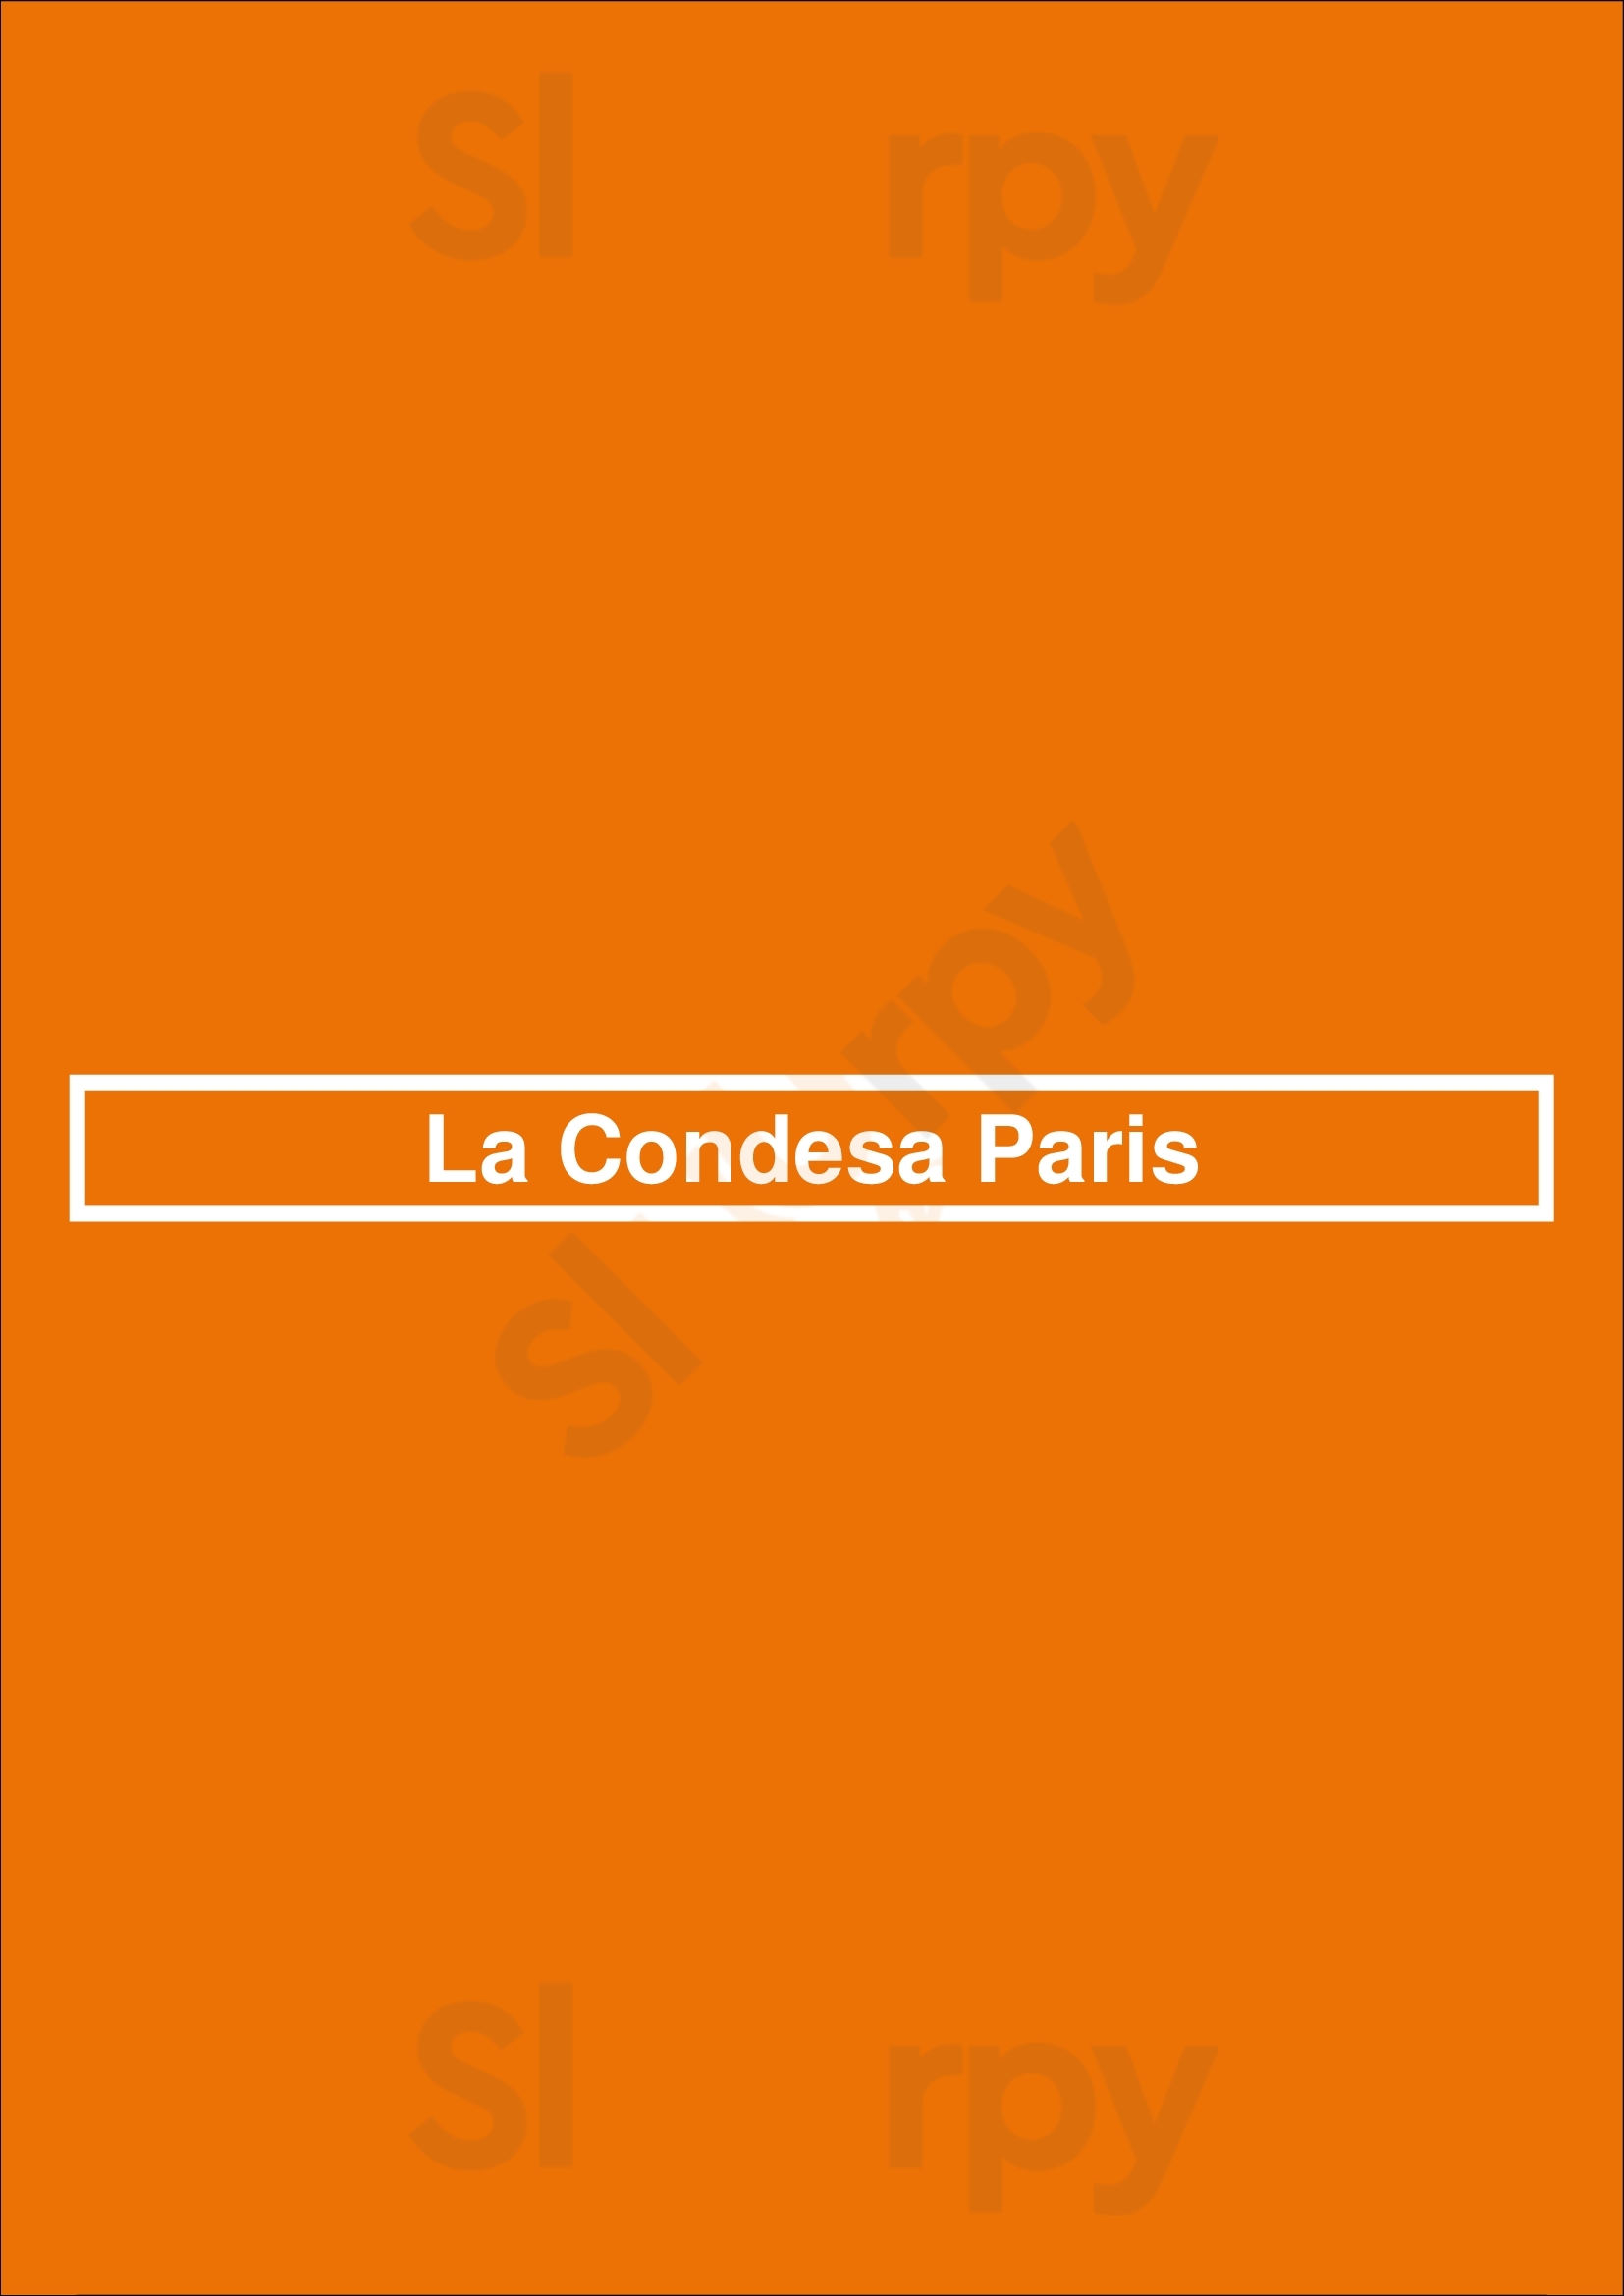 La Condesa Paris Paris Menu - 1